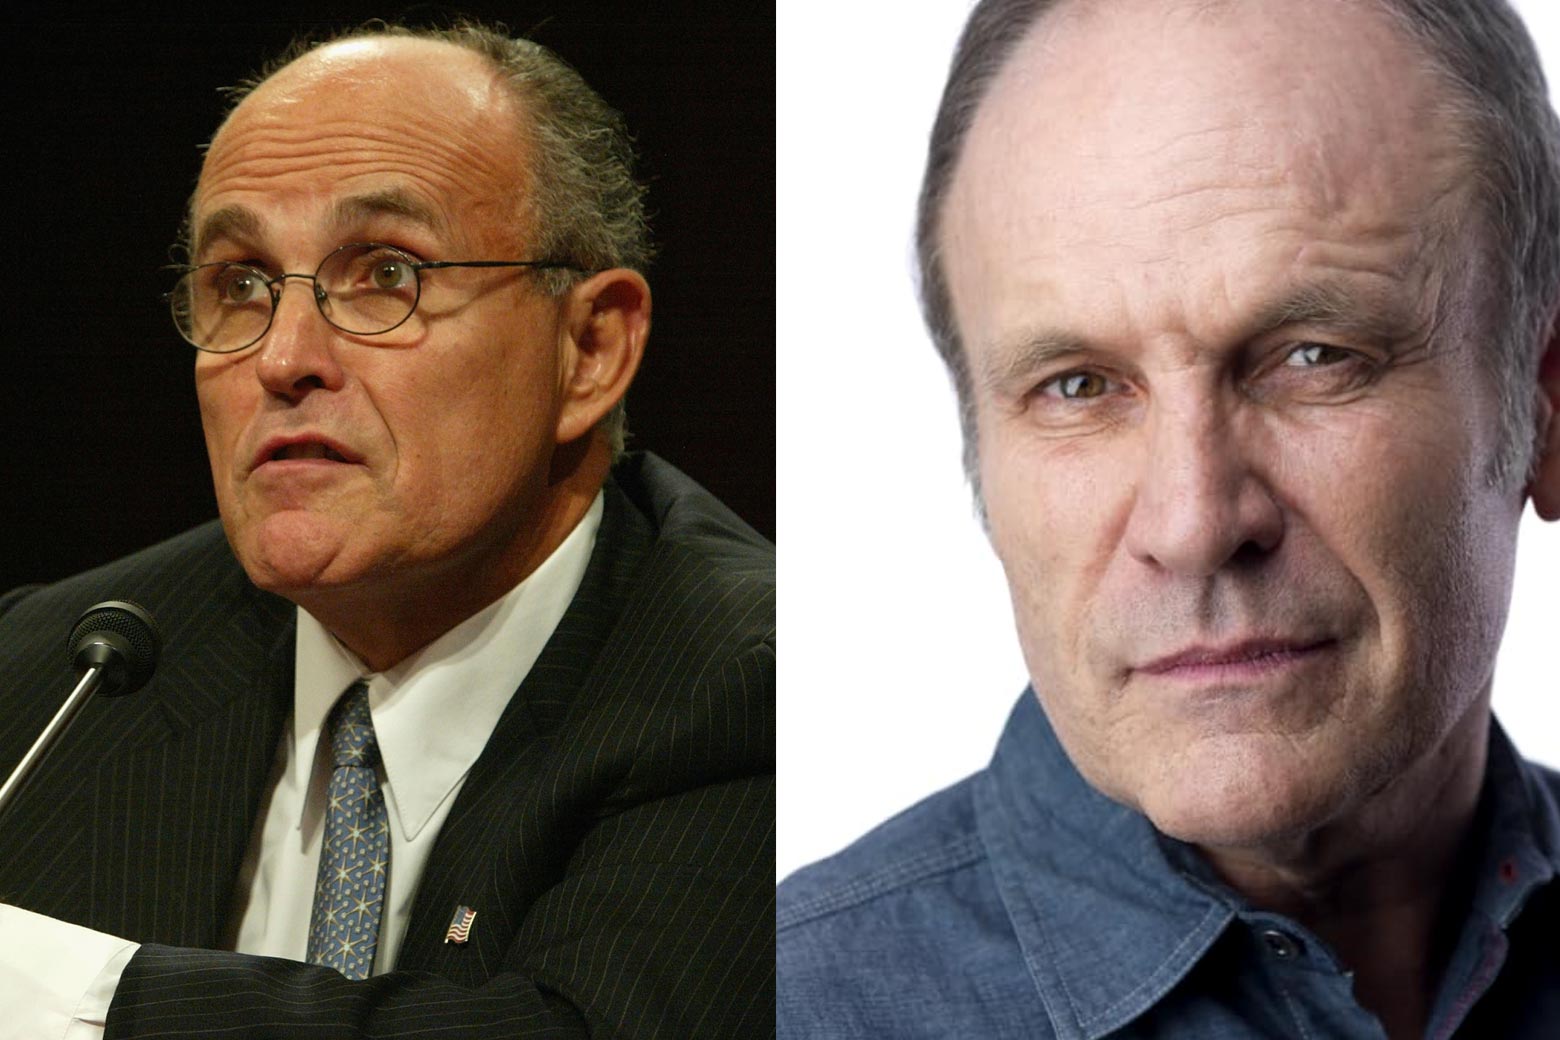 Left: Rudy Giuliani. Right: Ned Van Zandt, who plays Rudy Giuliani in Painkiller.